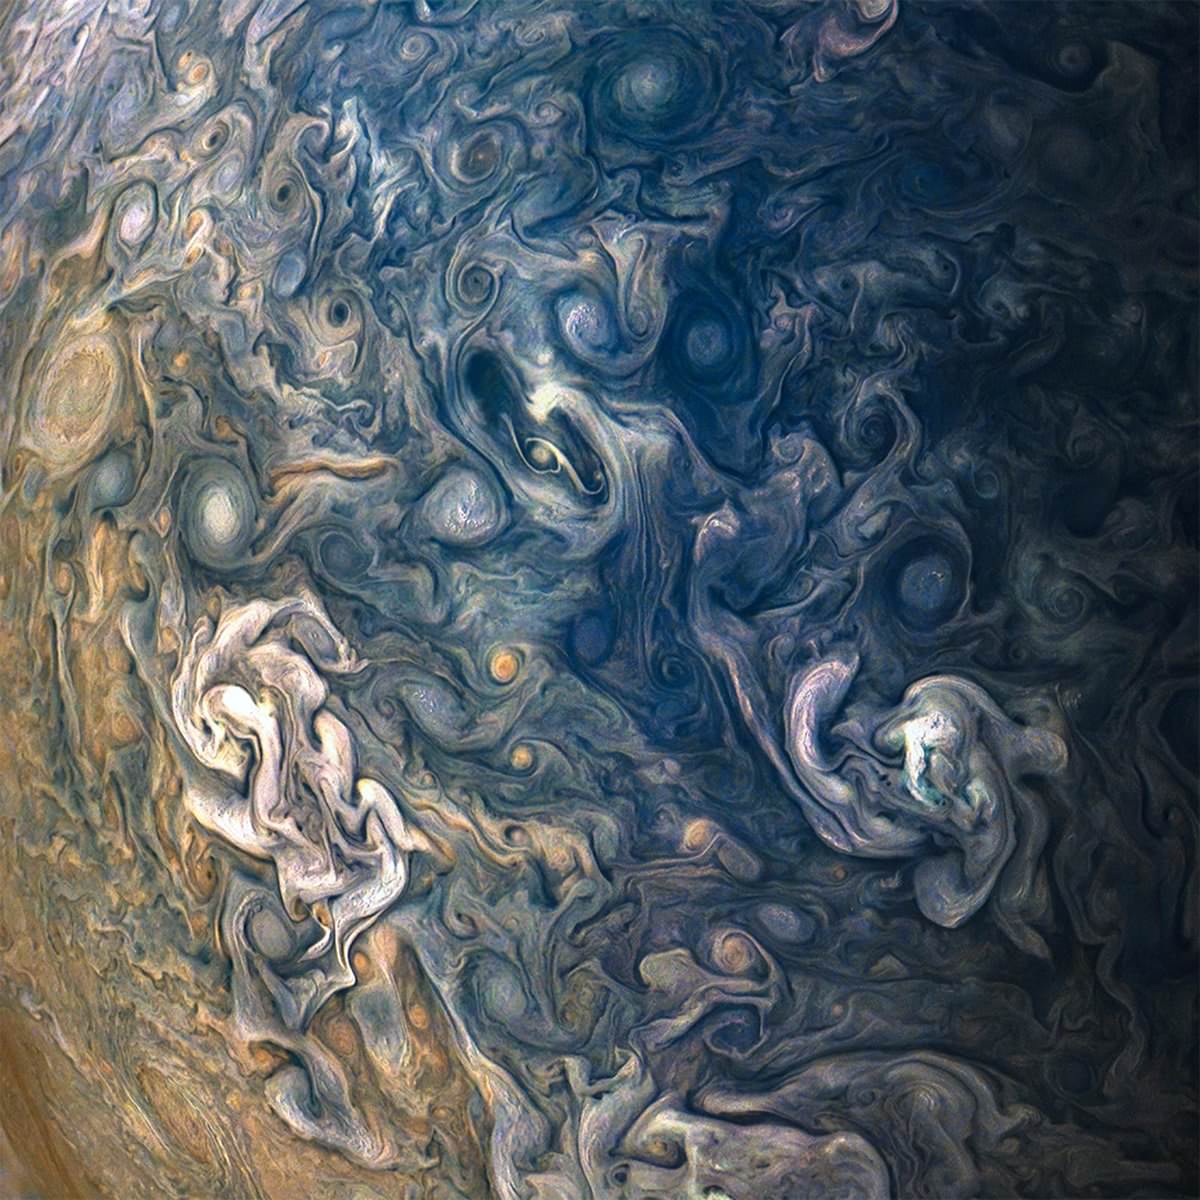 NASA's $1 billion Jupiter probe has taken mind-bending new photos of the Gas Giant.